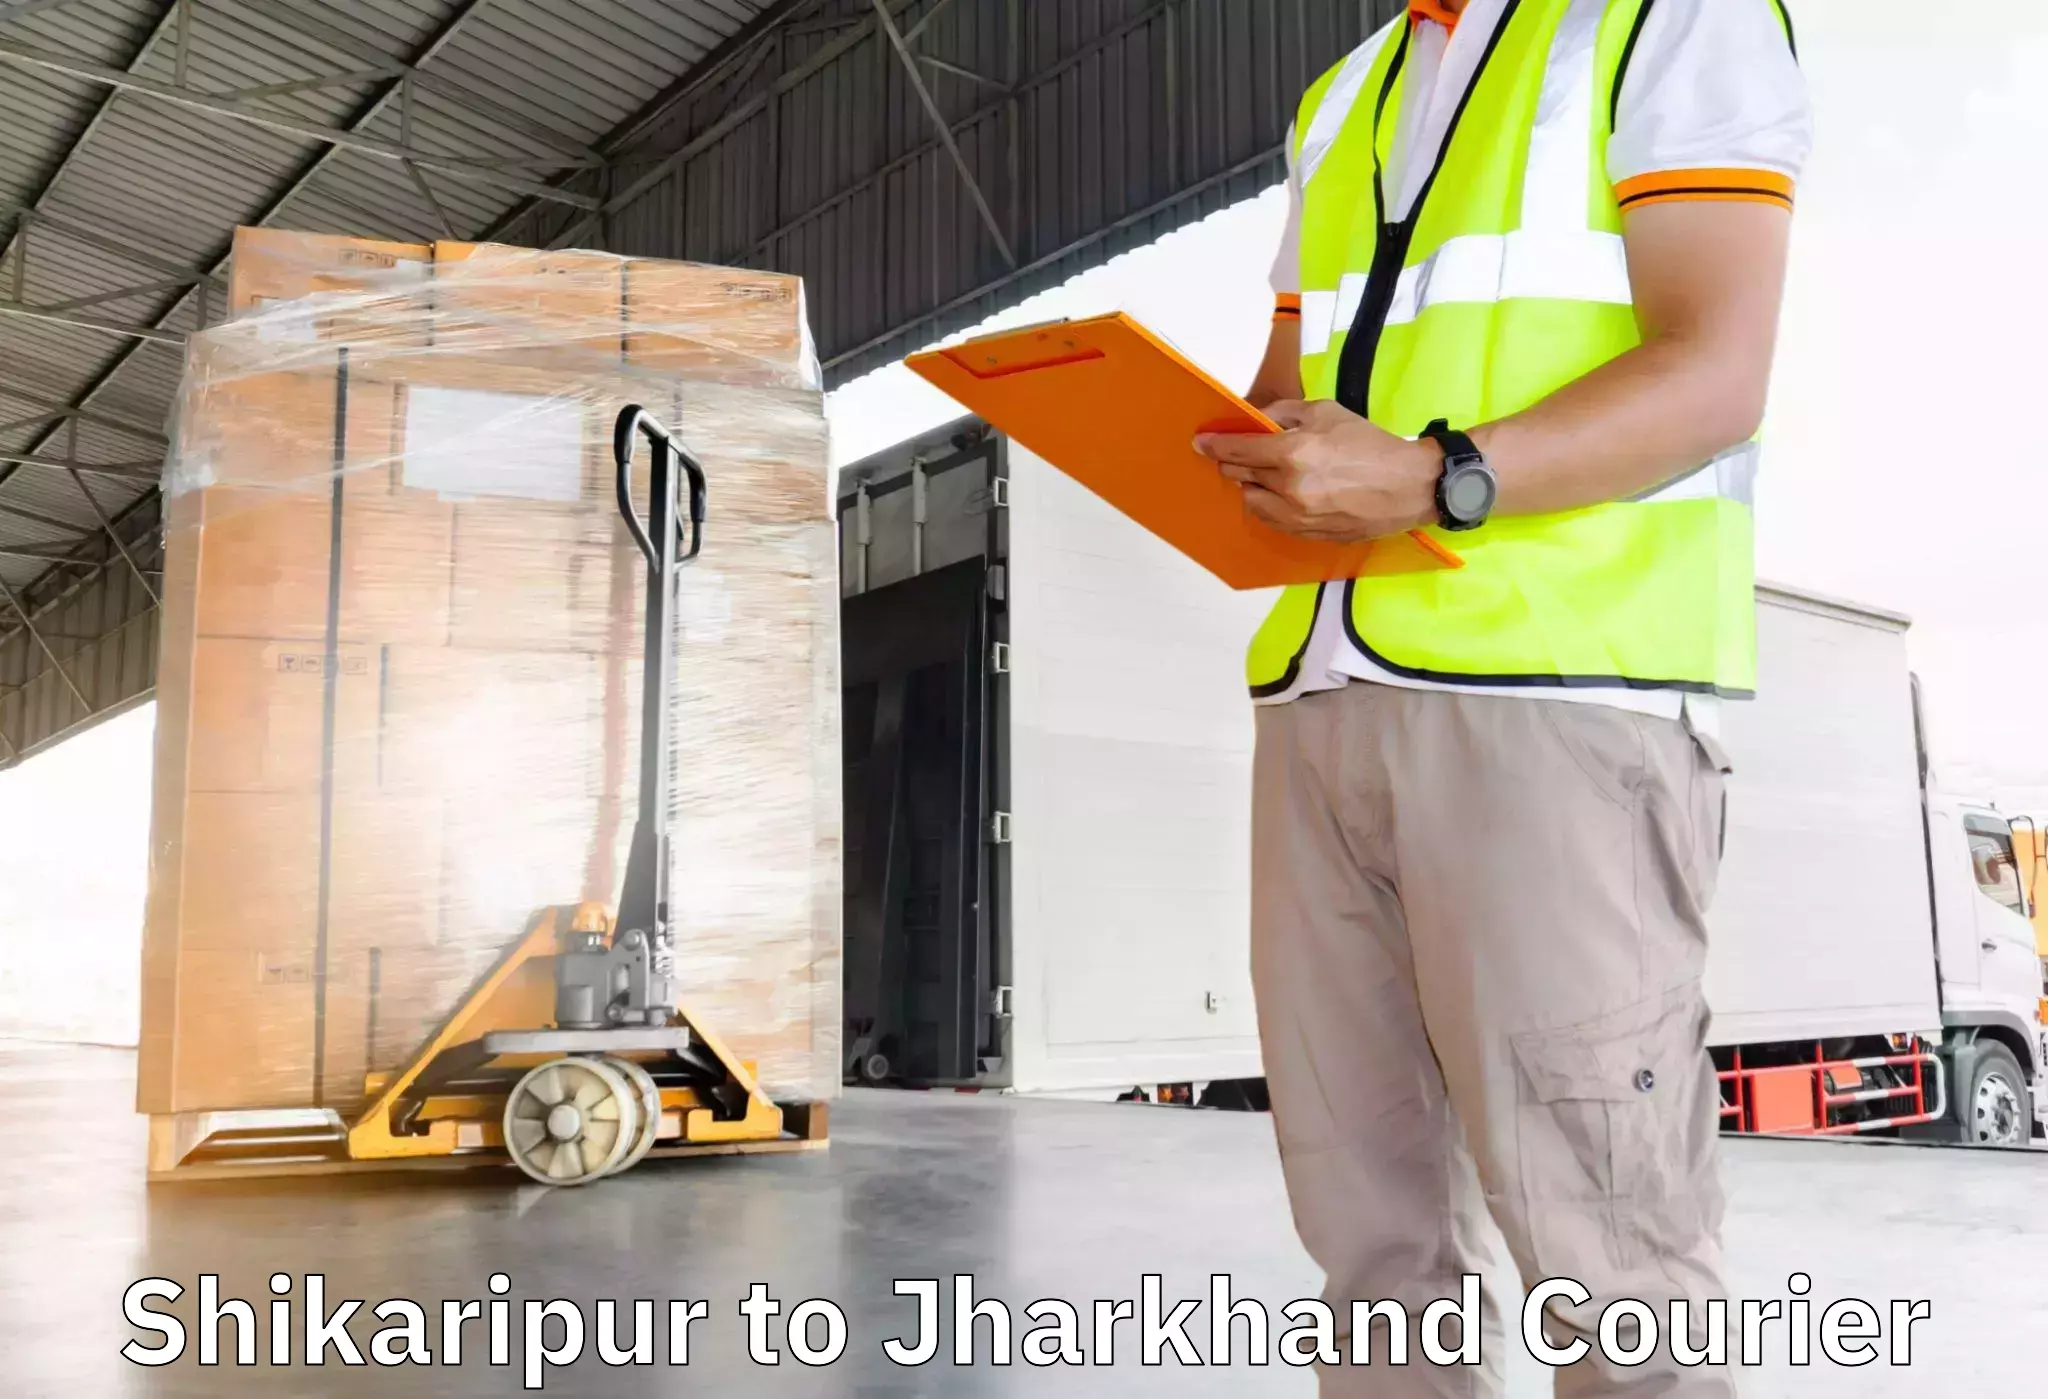 Furniture moving experts Shikaripur to Medininagar